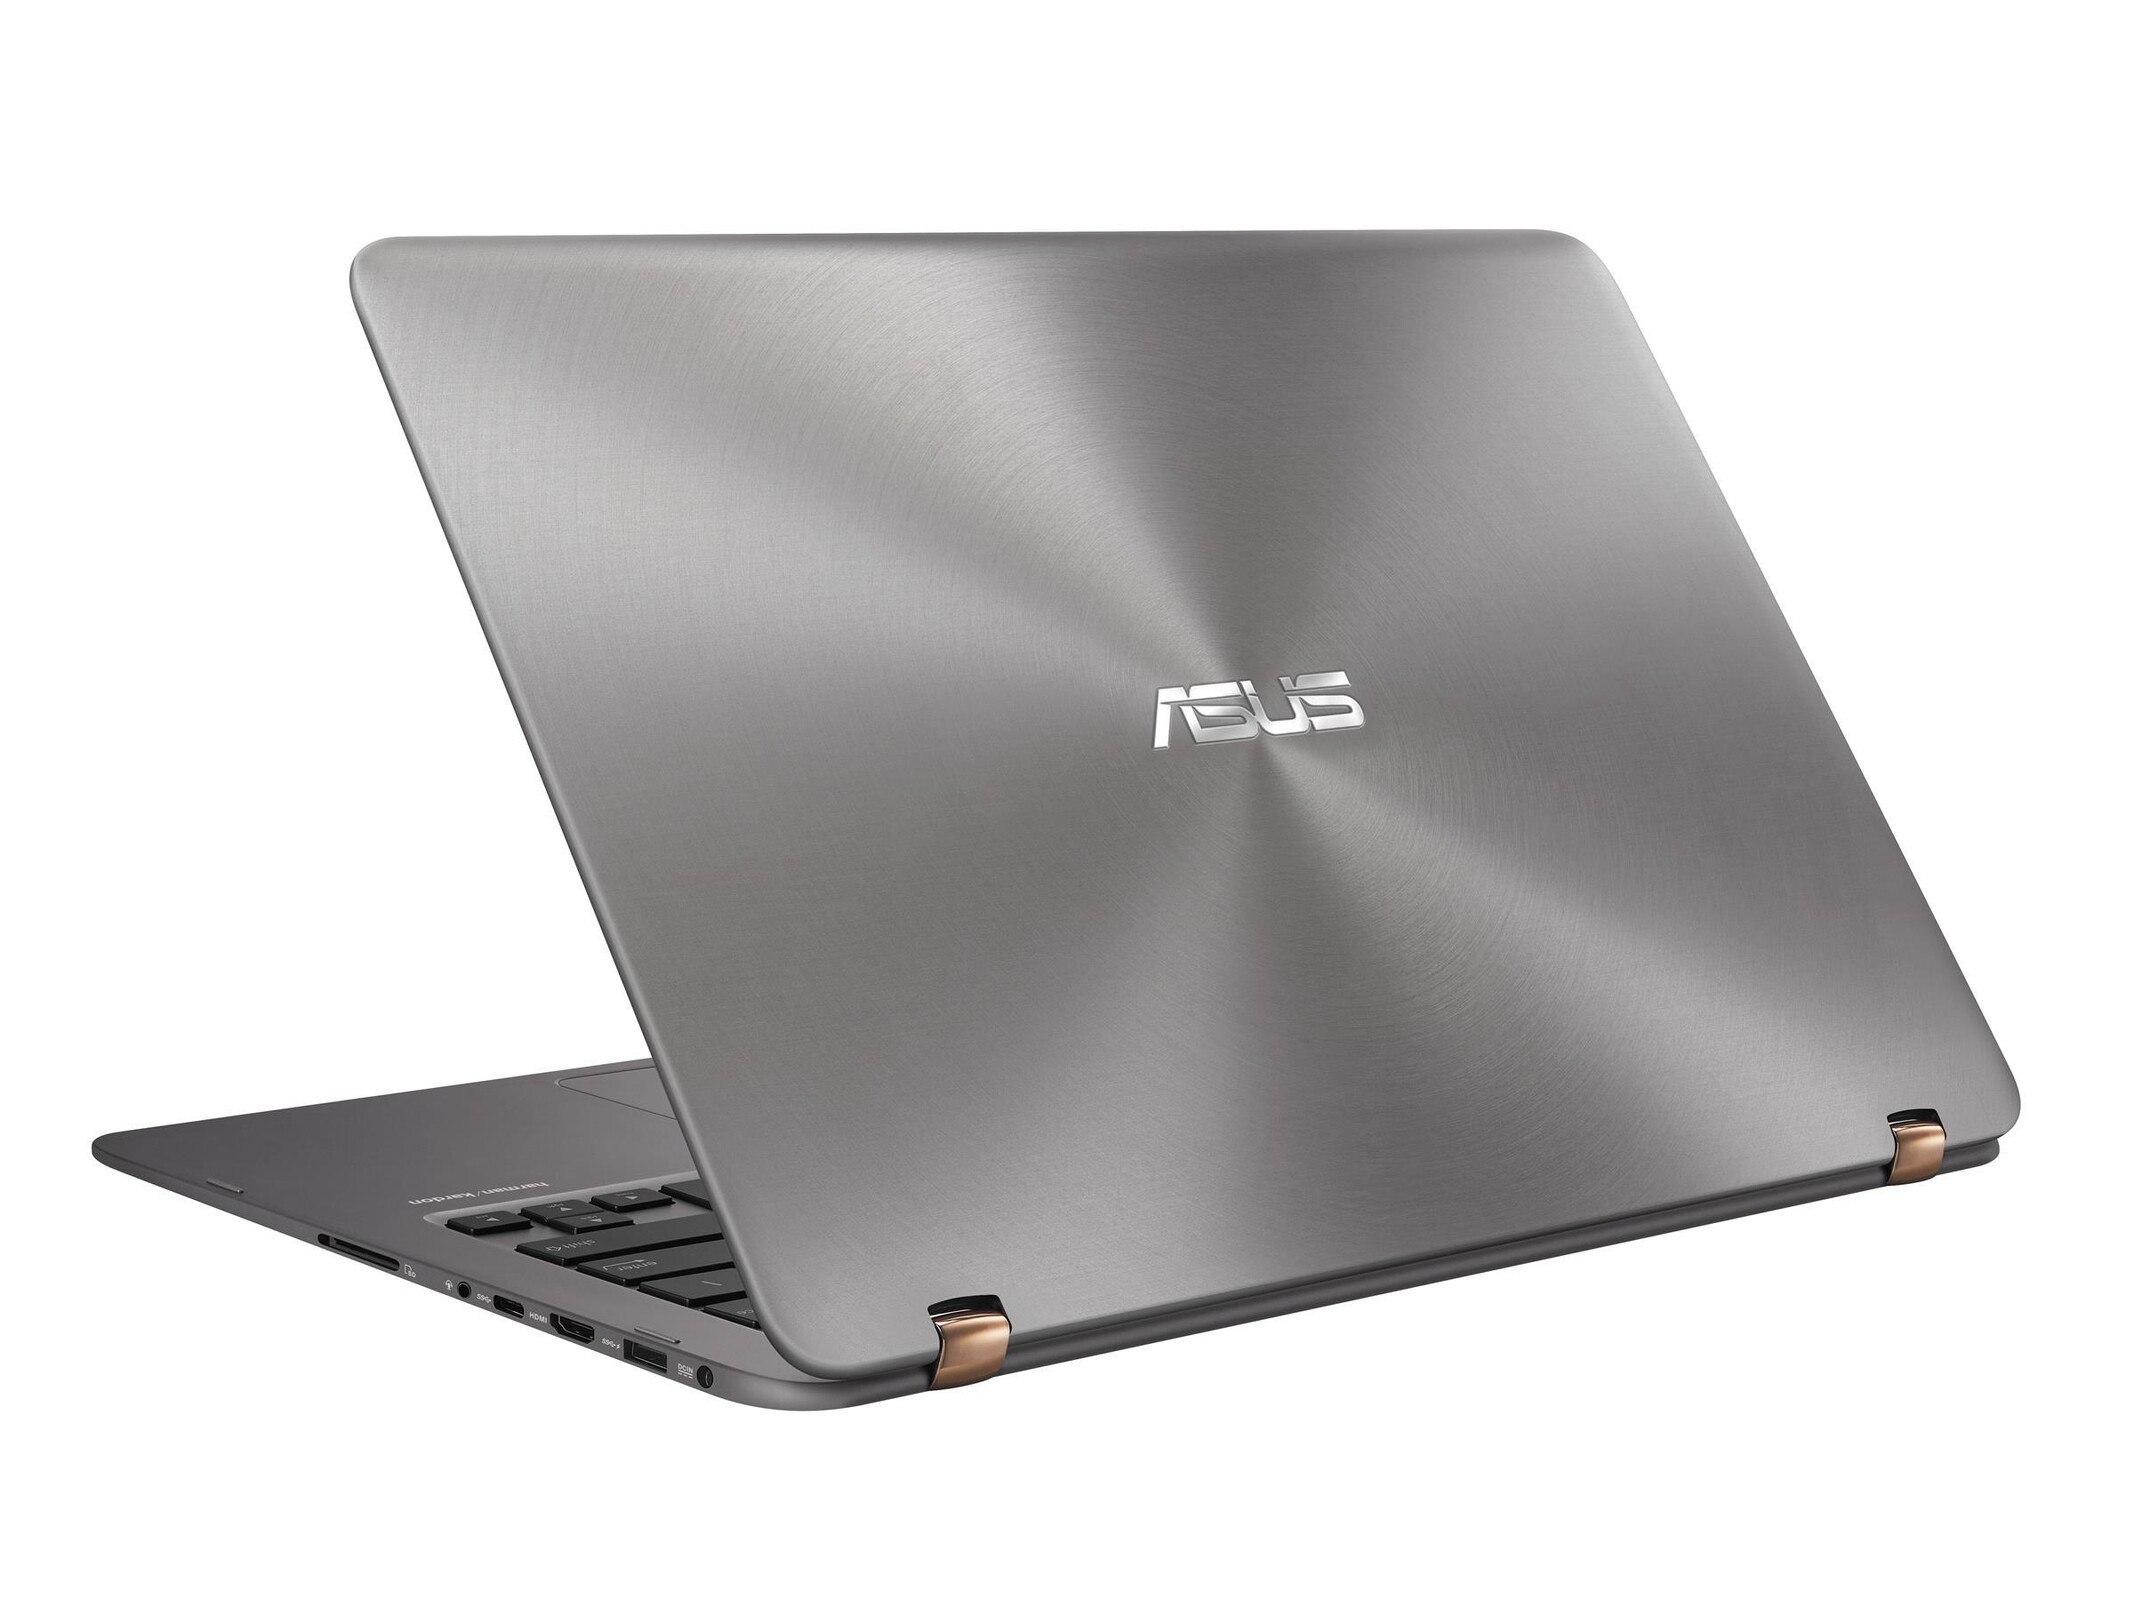 Asus Zenbook Flip UX360UAK-C4280T